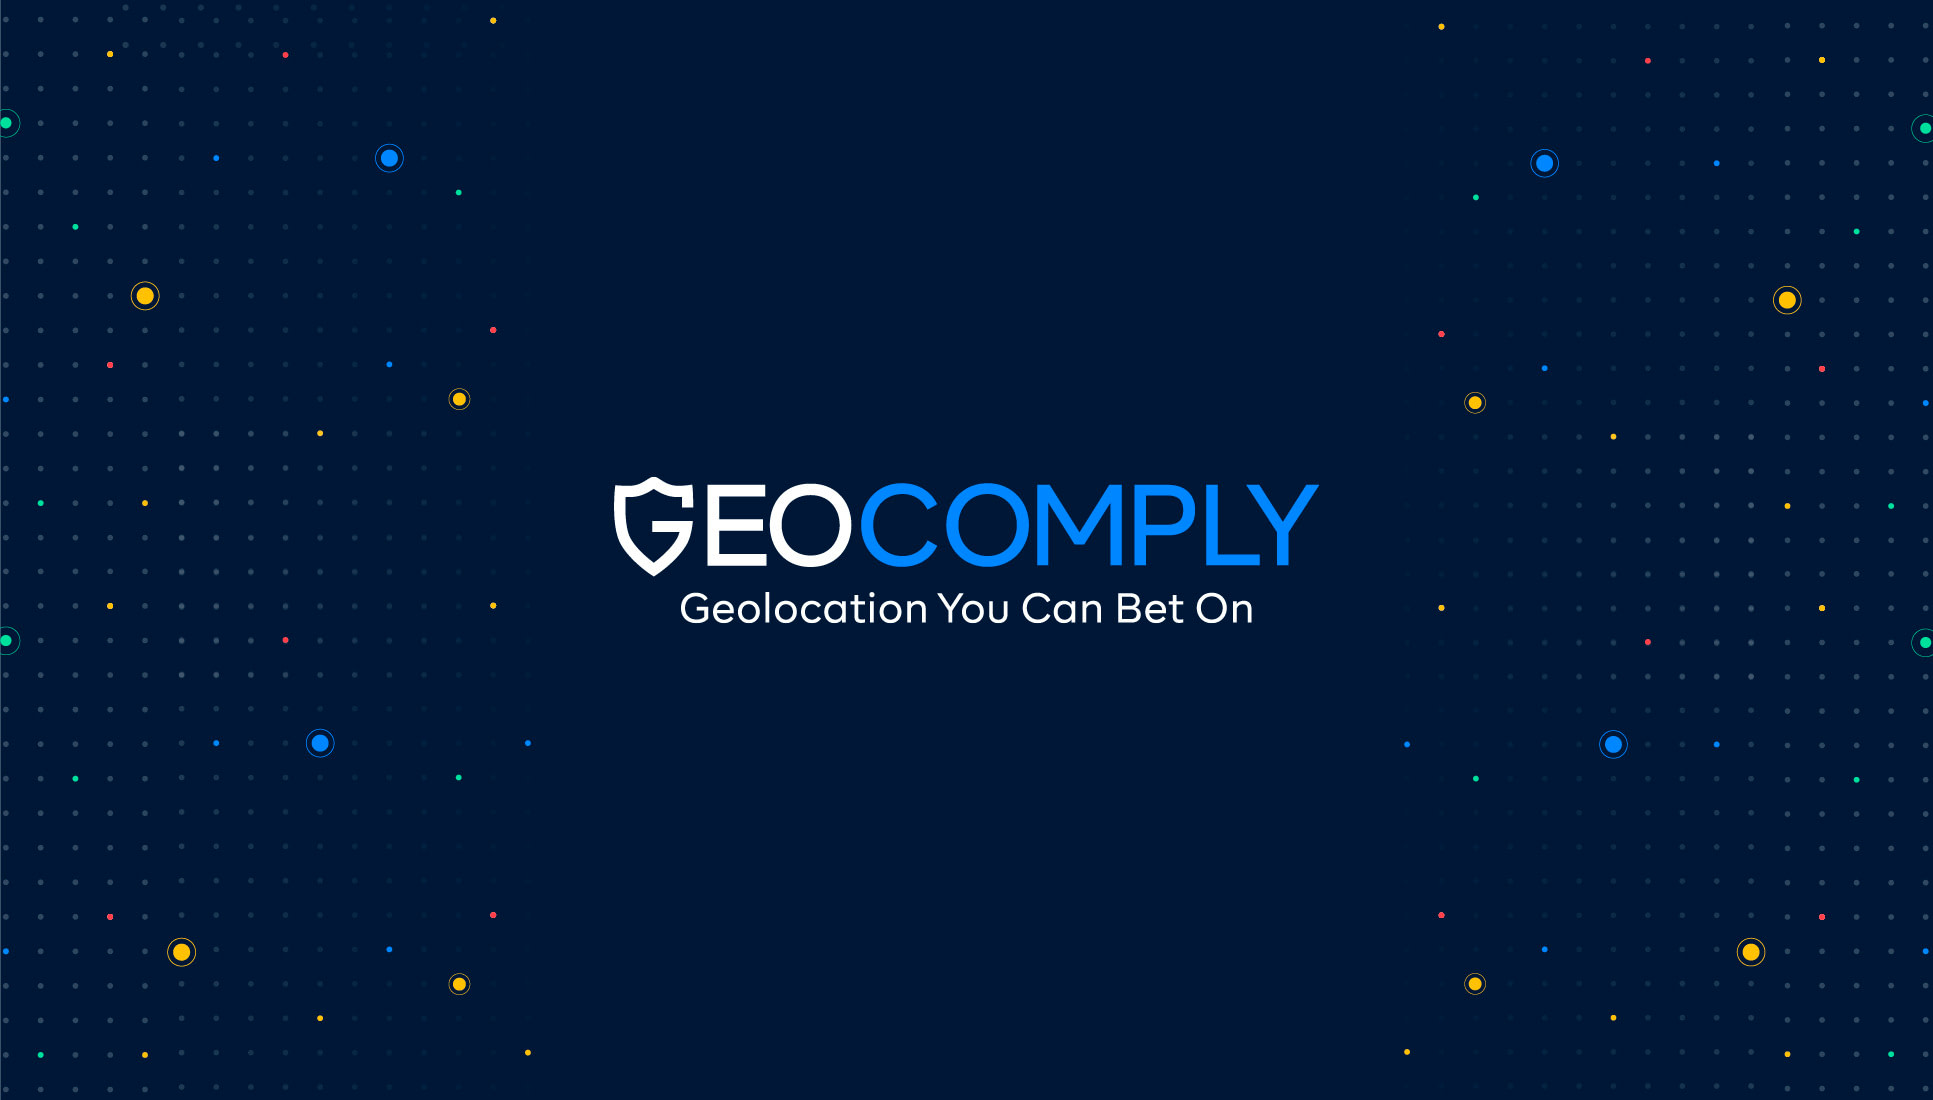 GeoComply